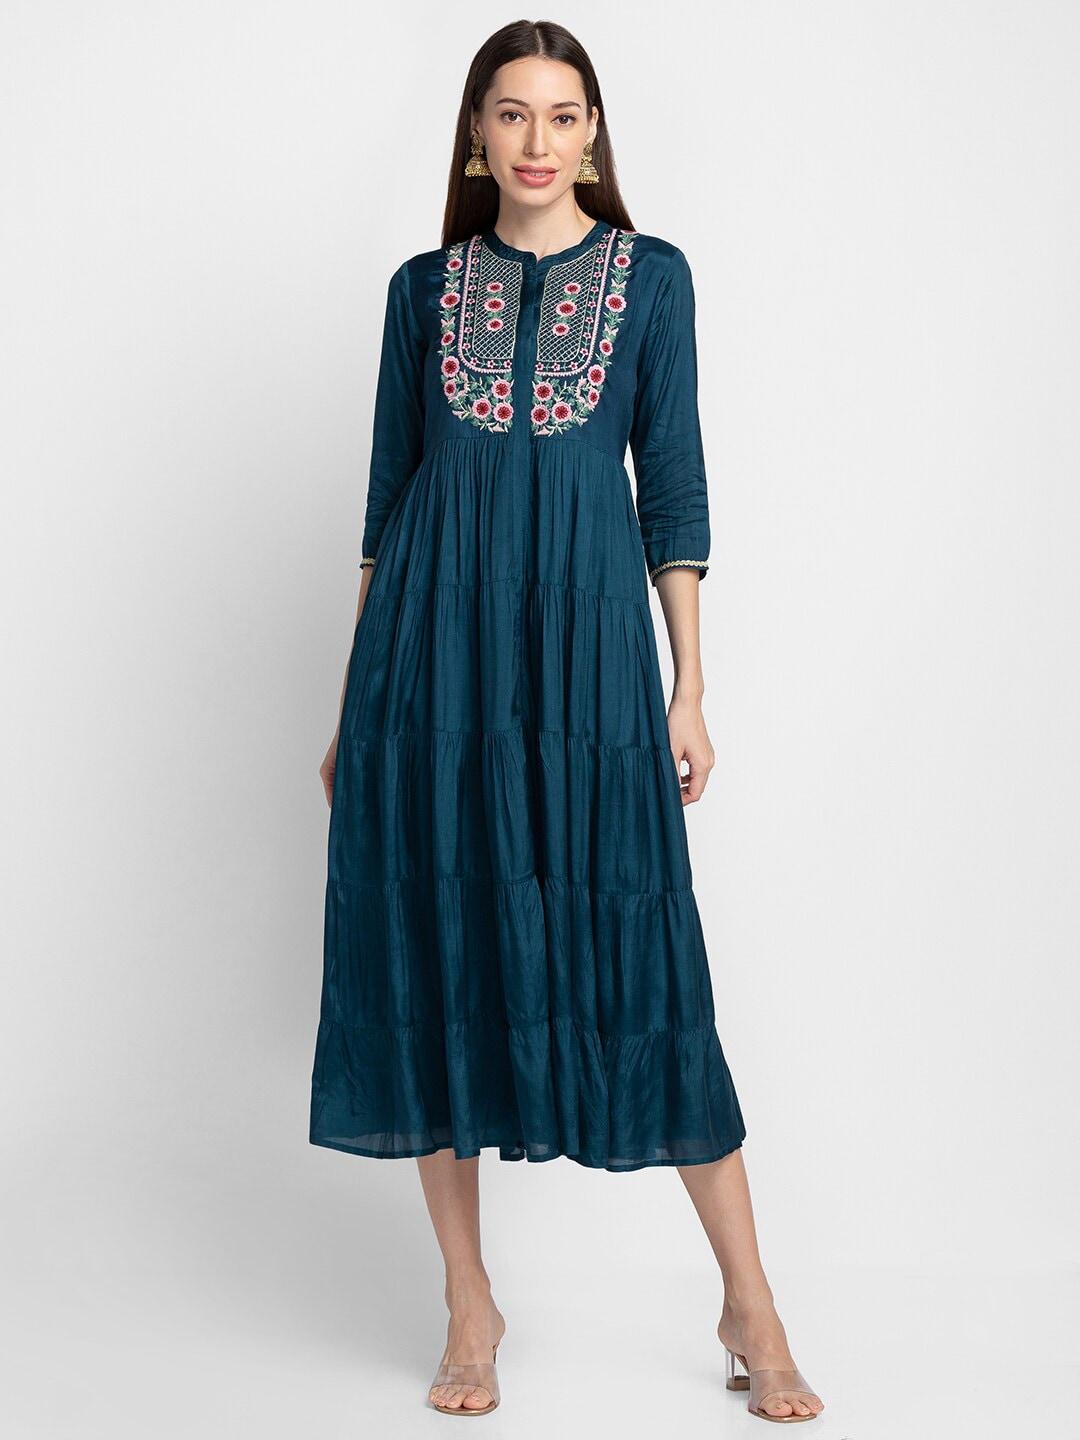 globus-teal-embroidered-ethnic-a-line-midi-dress